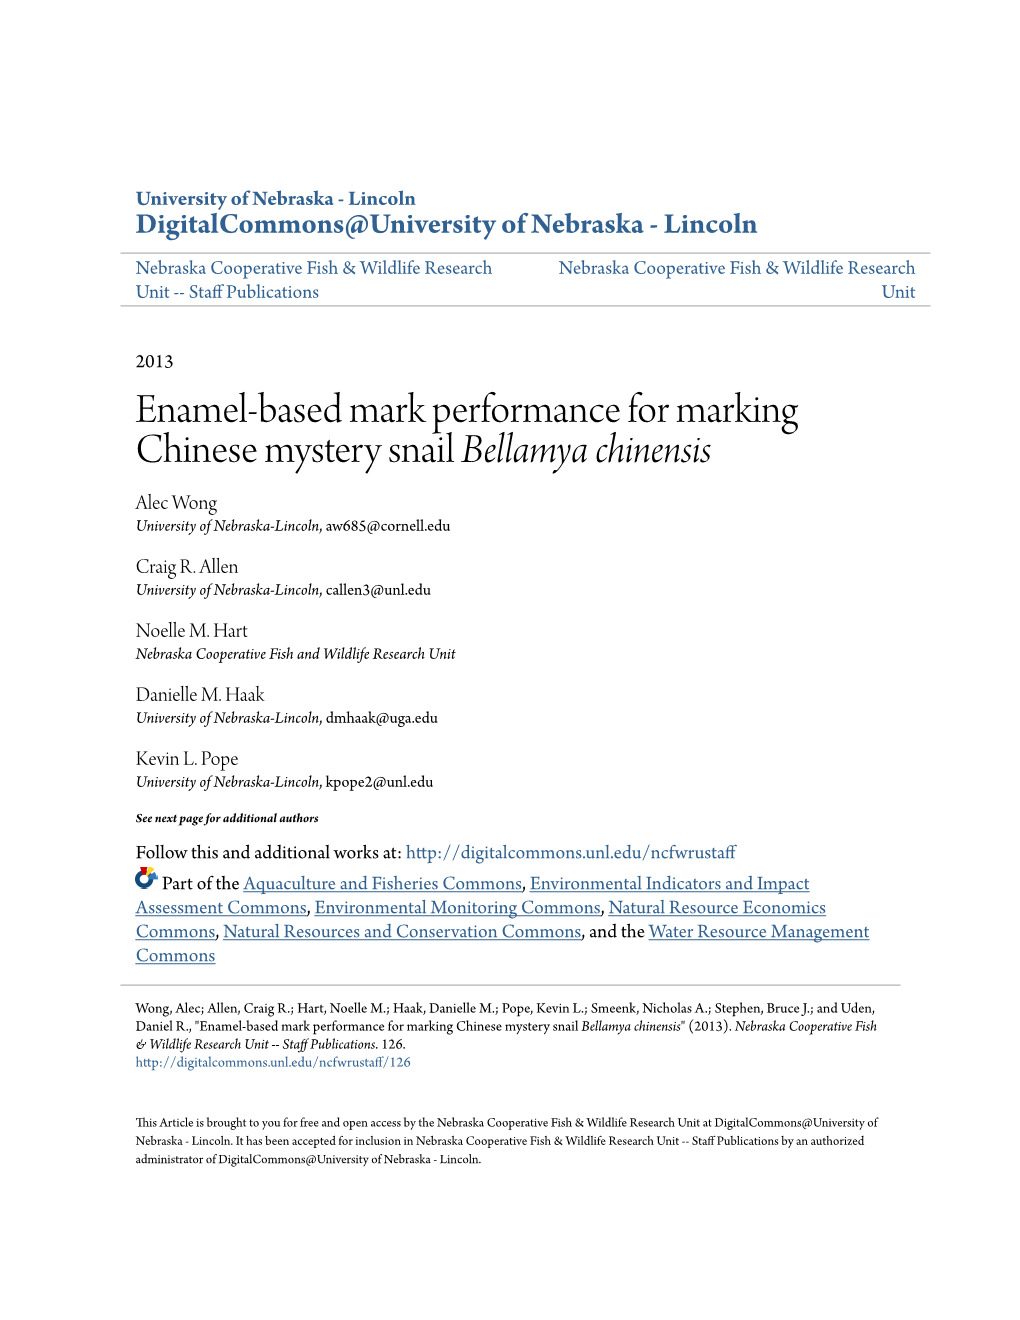 Enamel-Based Mark Performance for Marking Chinese Mystery Snail Bellamya Chinensis Alec Wong University of Nebraska-Lincoln, Aw685@Cornell.Edu